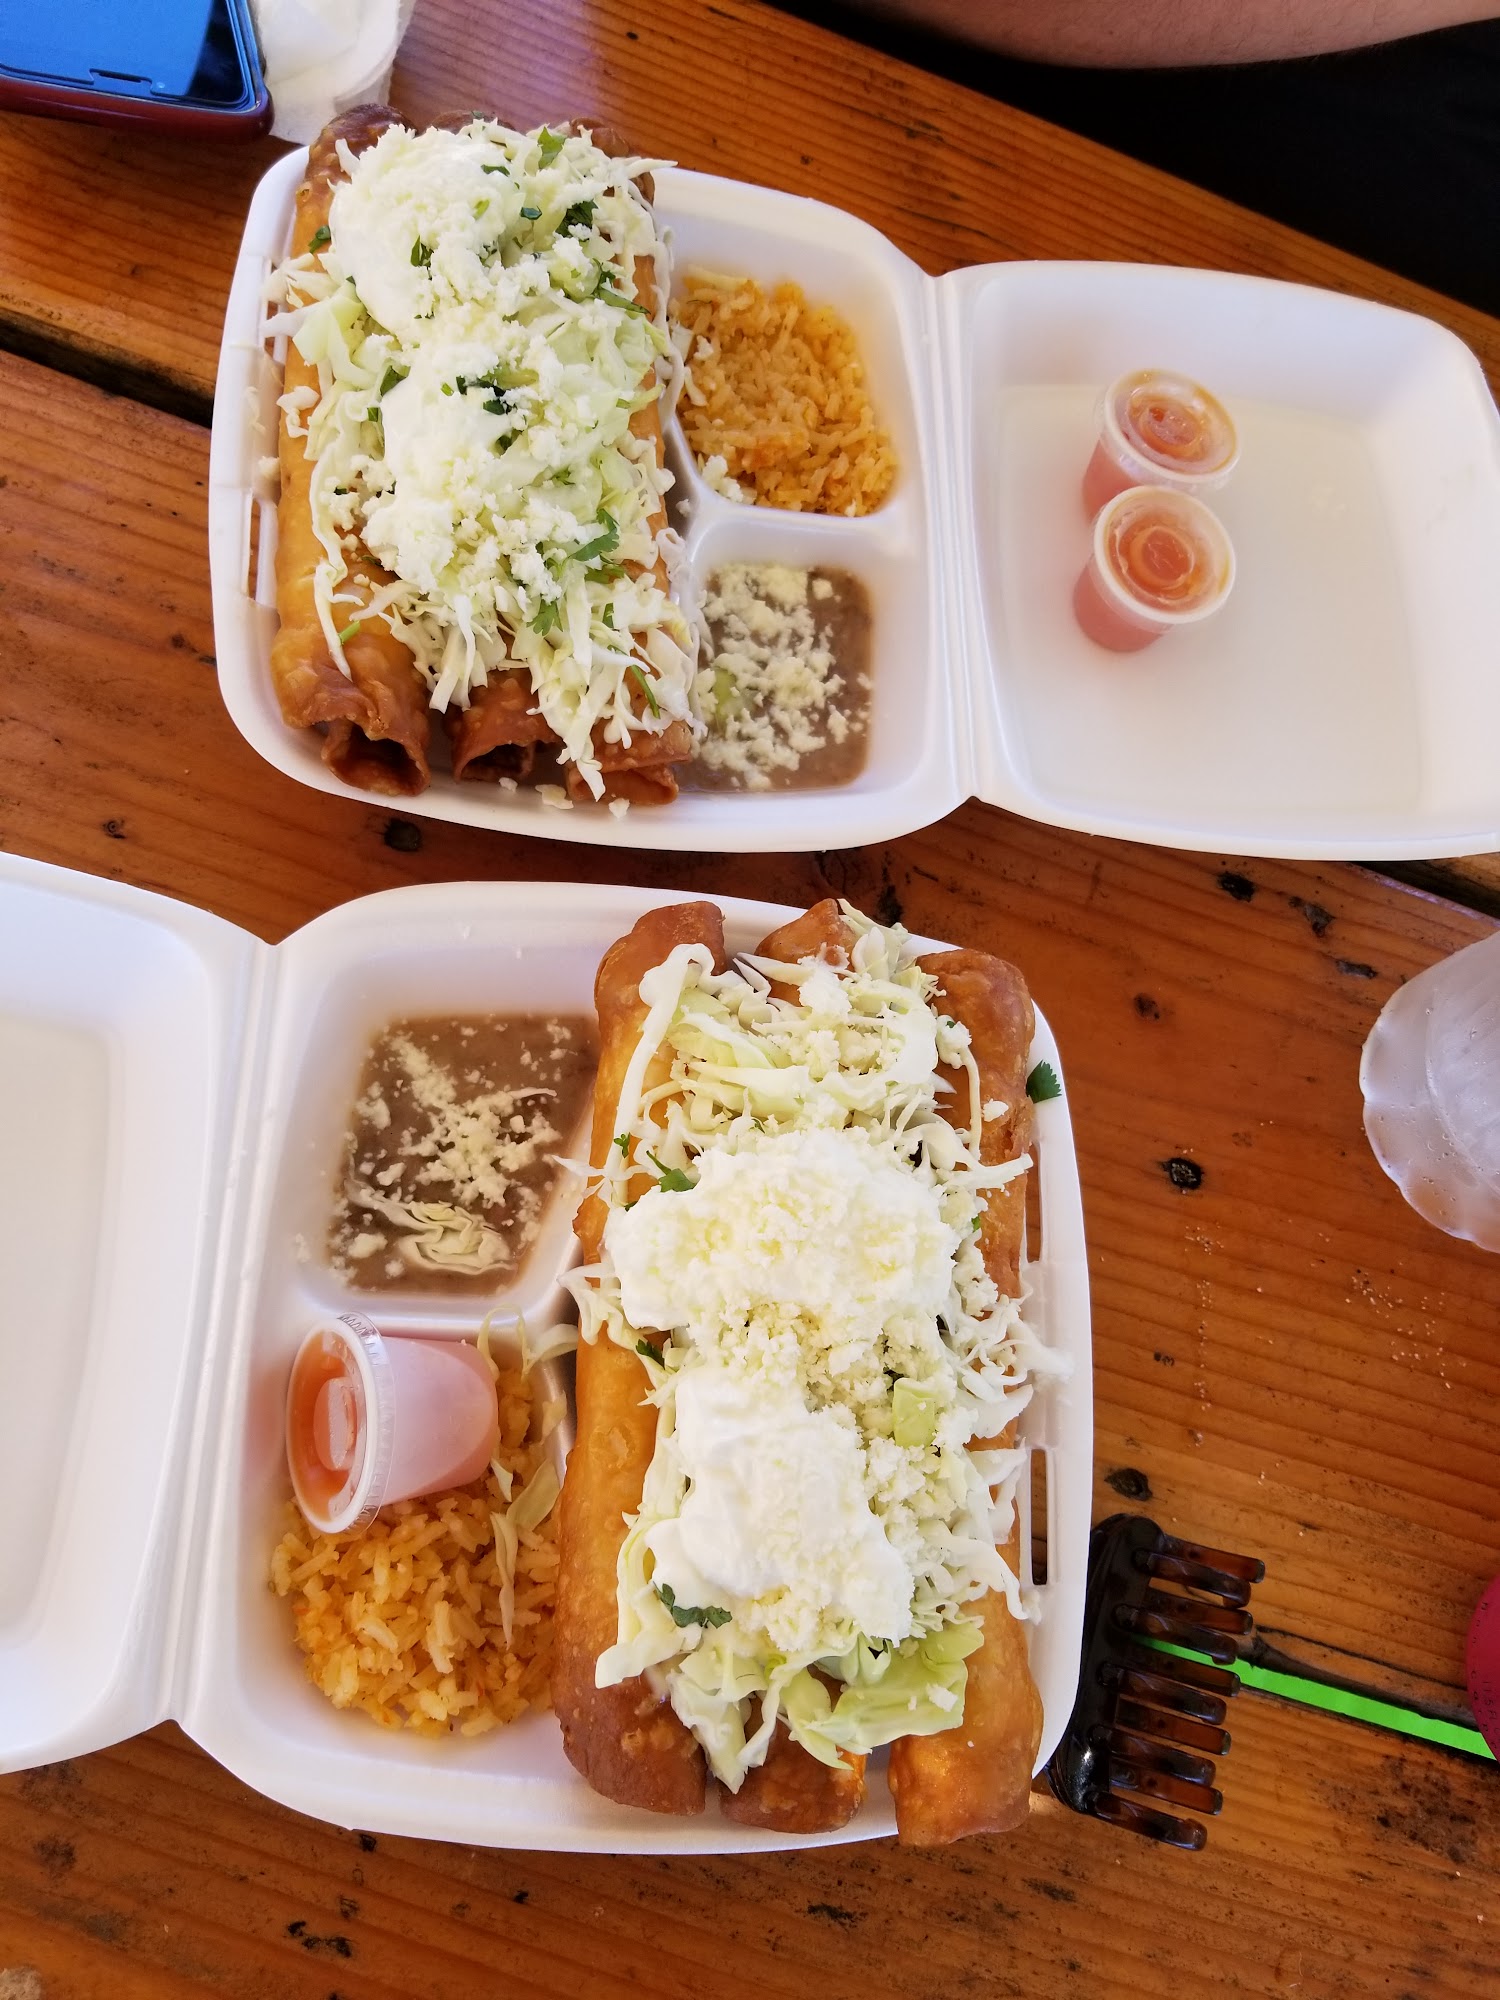 Nelly's Tacos Mexicano